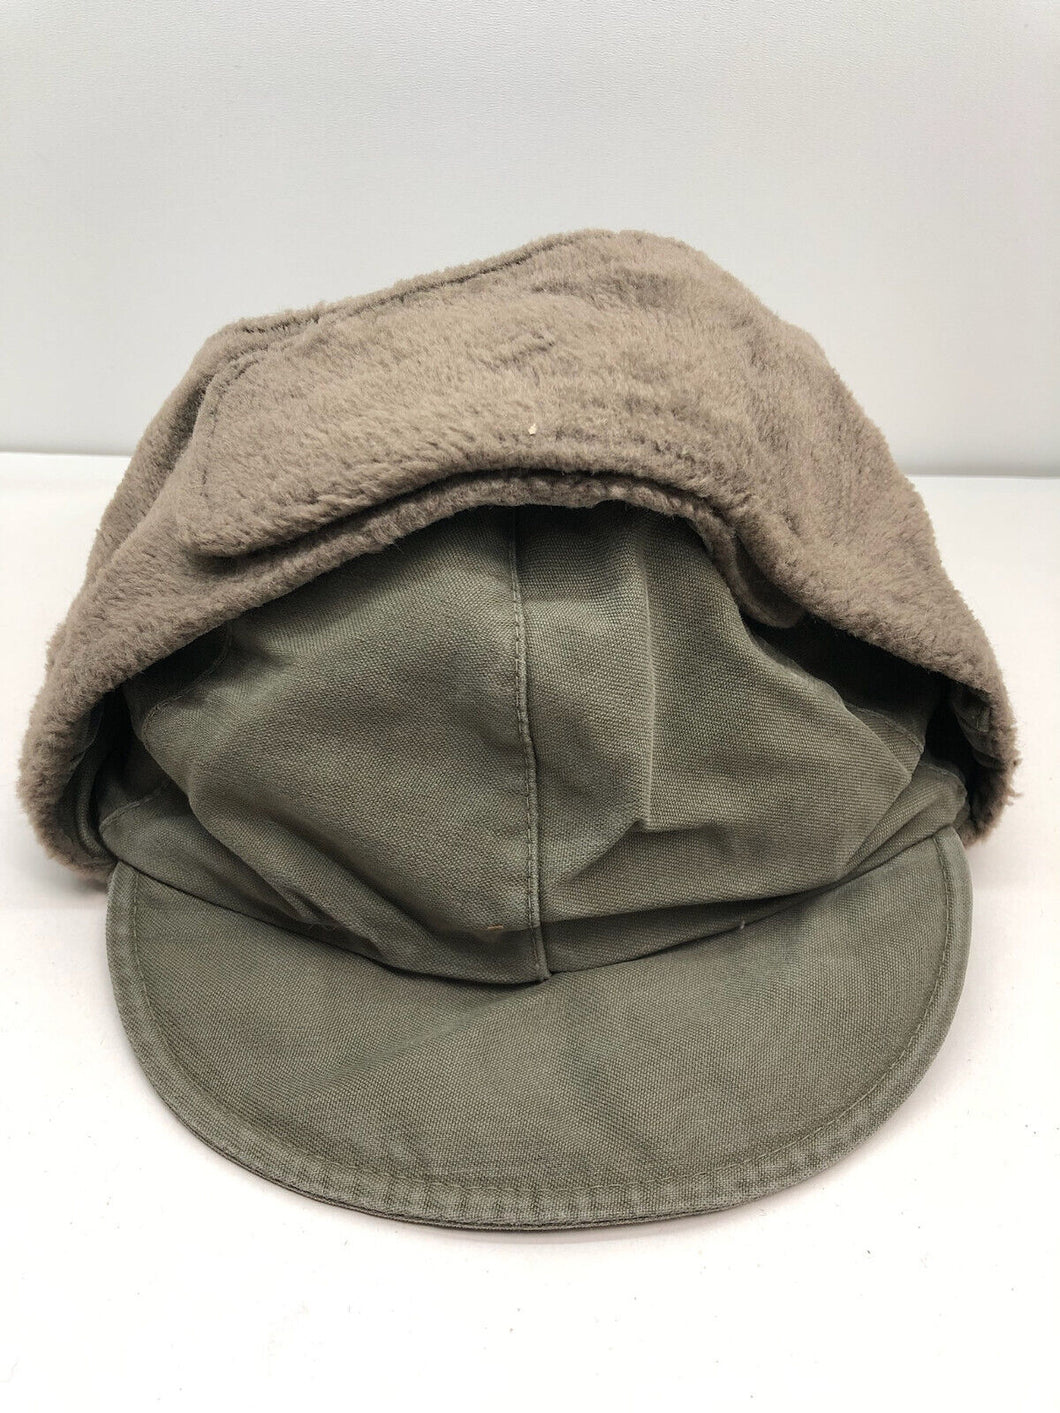 Original German Army Surplus Bundersweir Cap with Neck Cover - Size 55